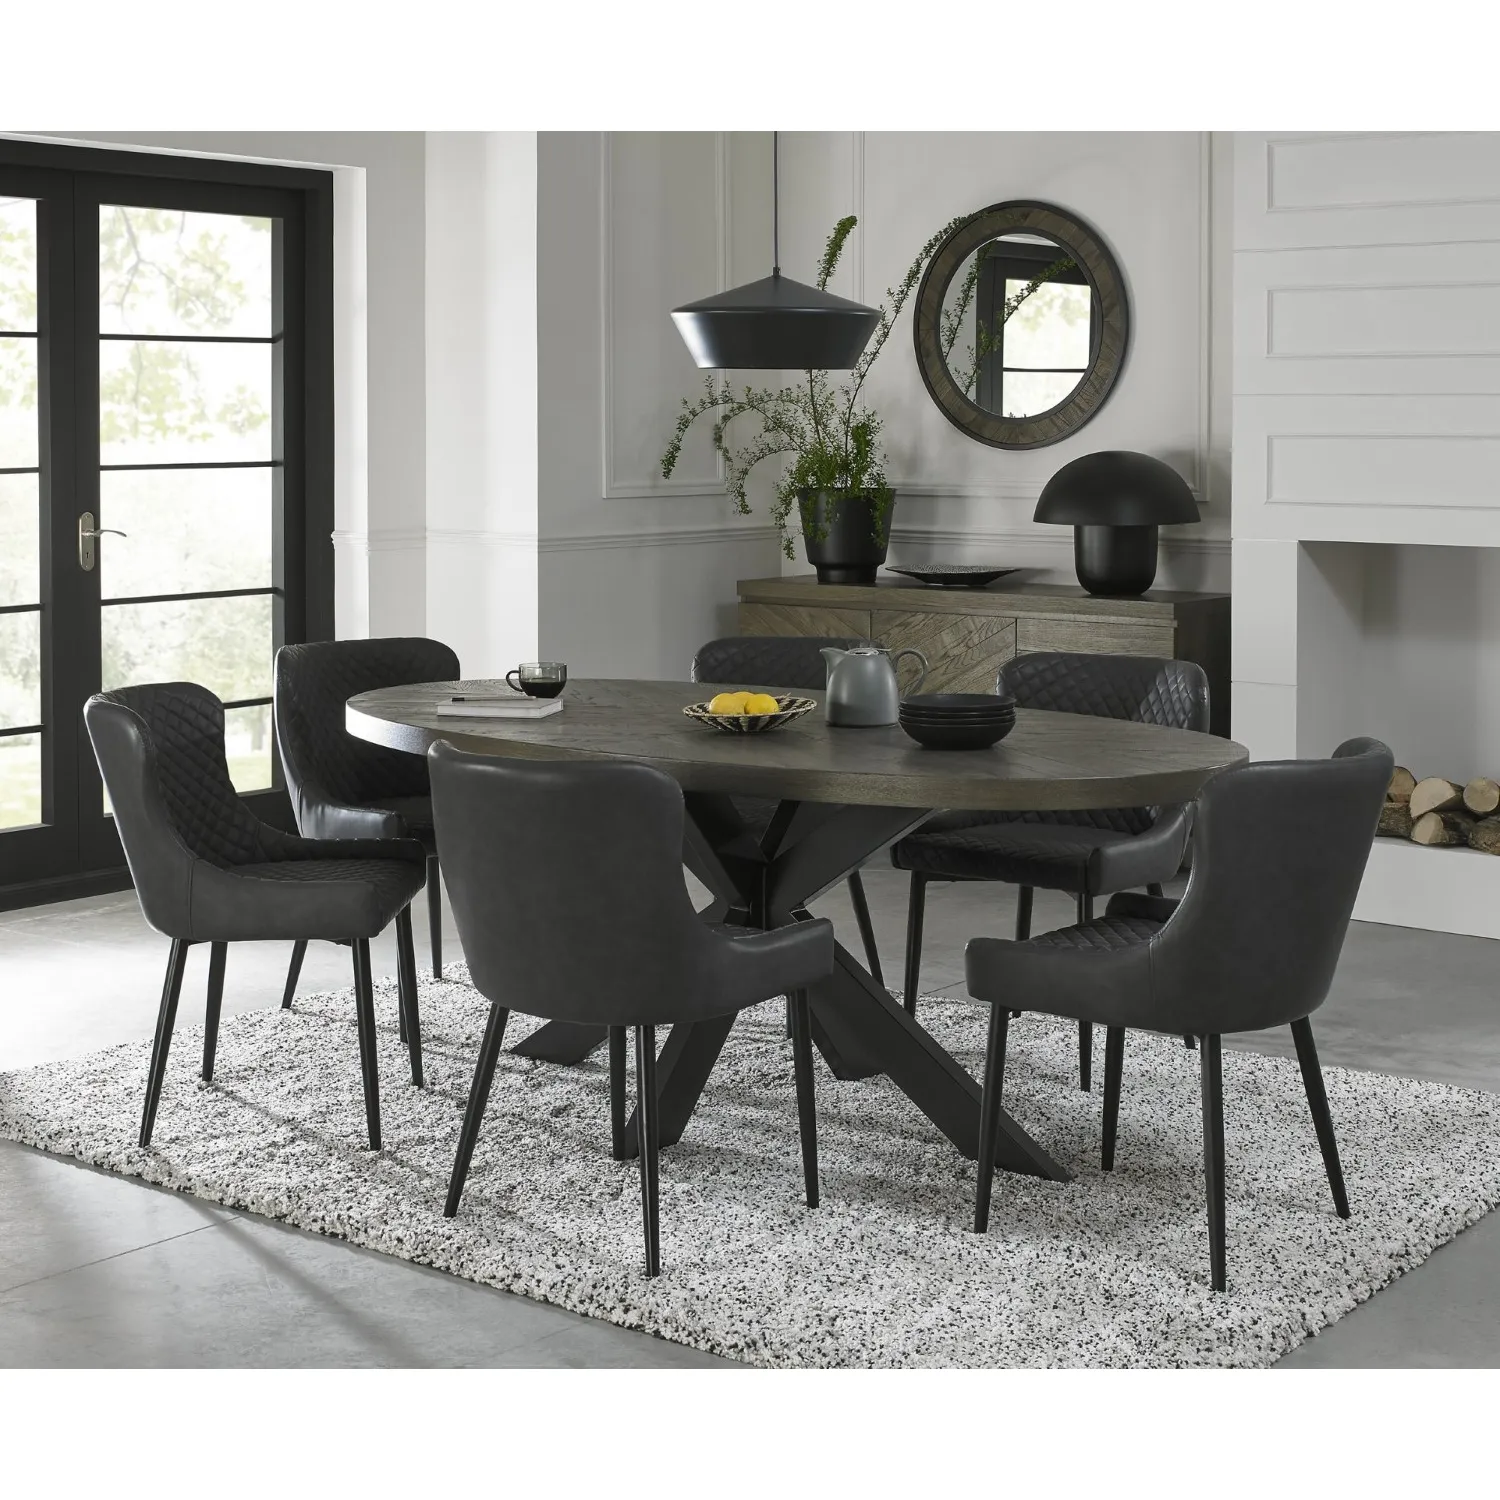 Dark Oak Oval Dining Table Set 6 Dark Grey Leather Chairs